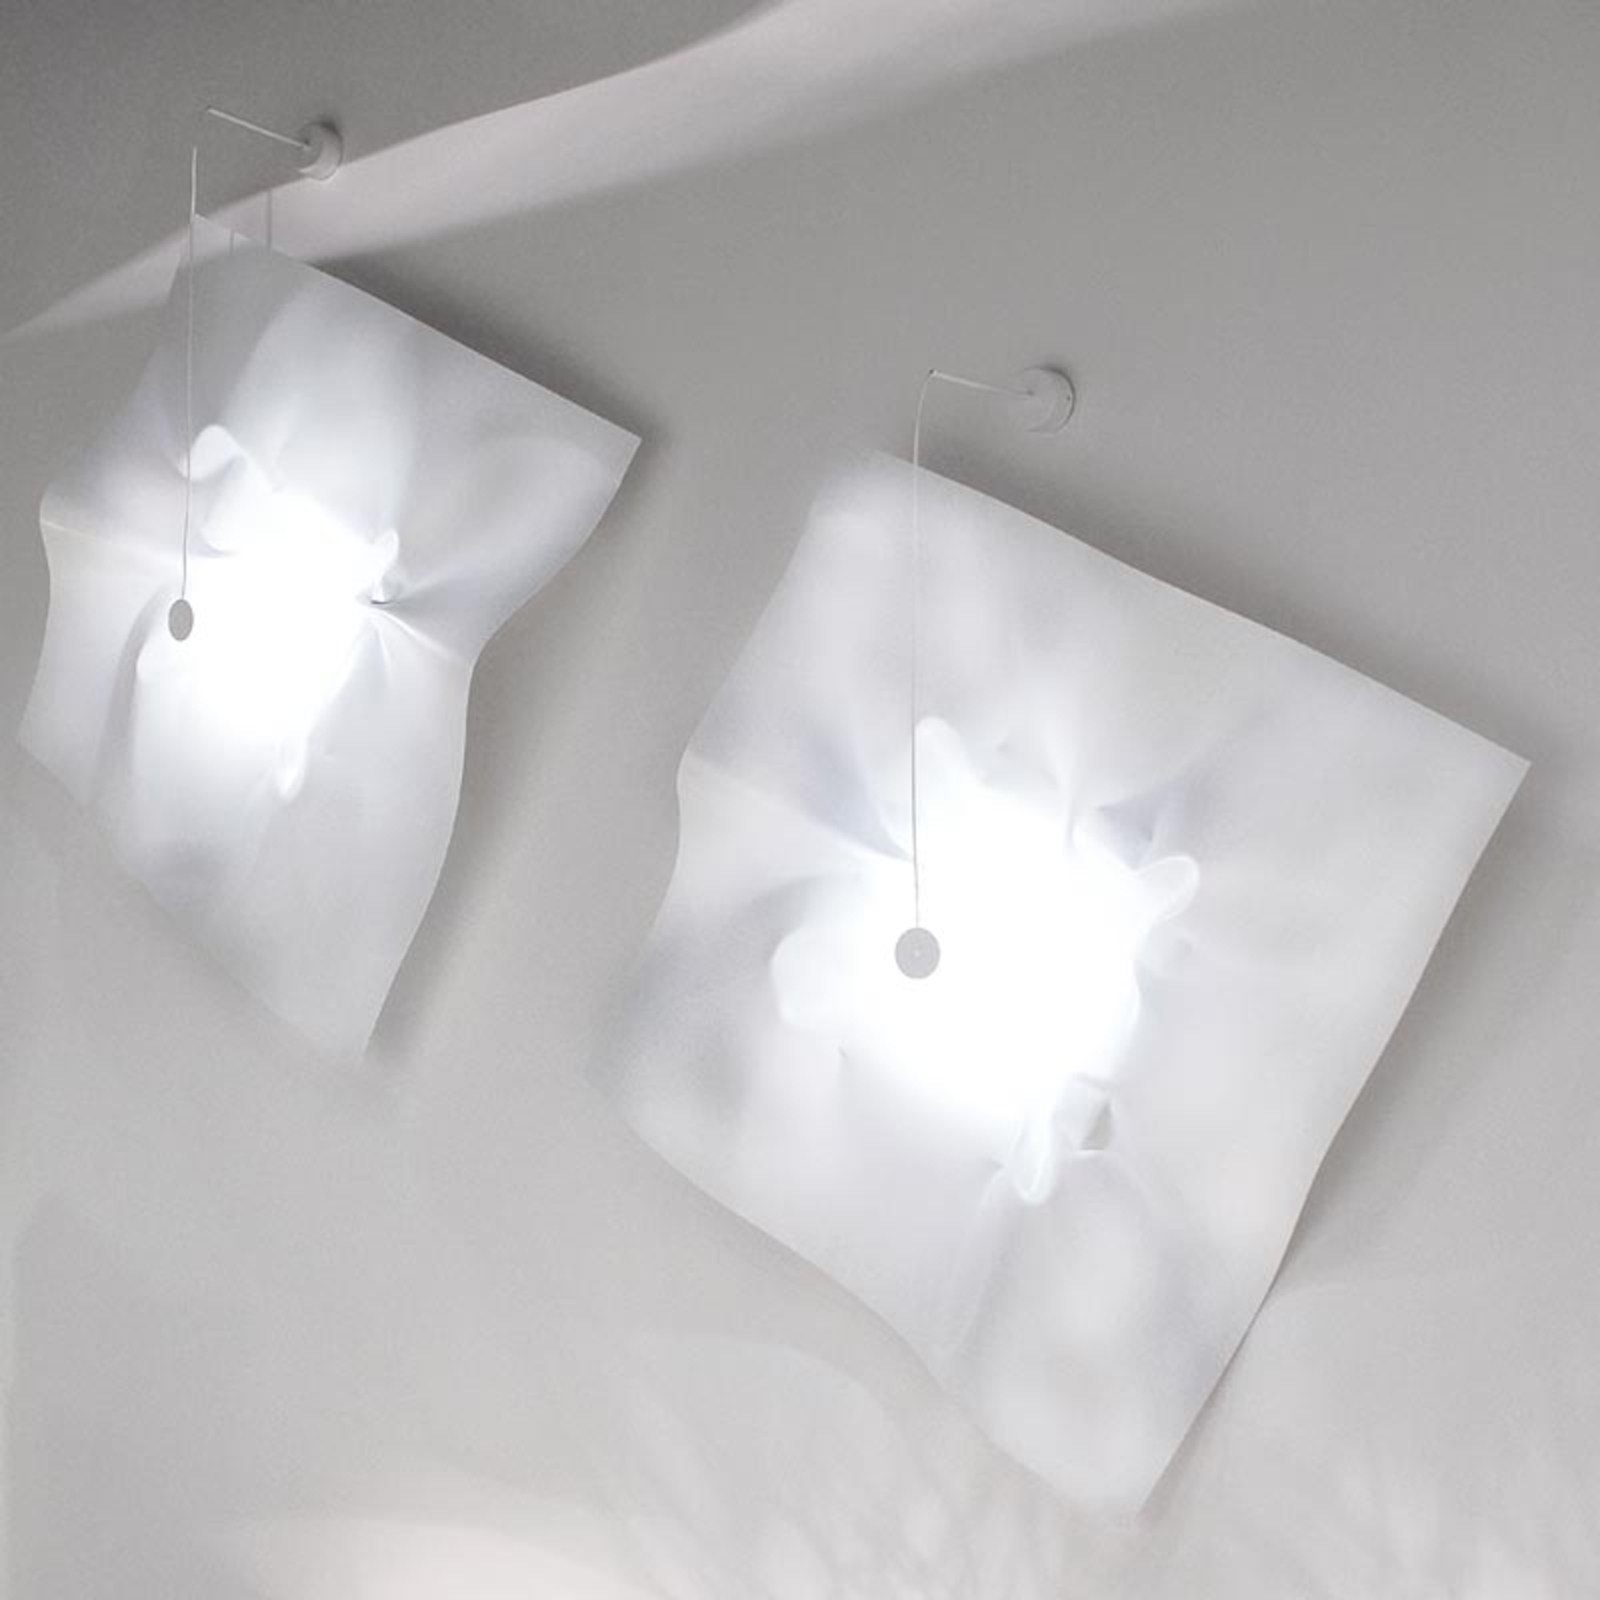 Designer-LED-vägglampa Crach 100 i vitt